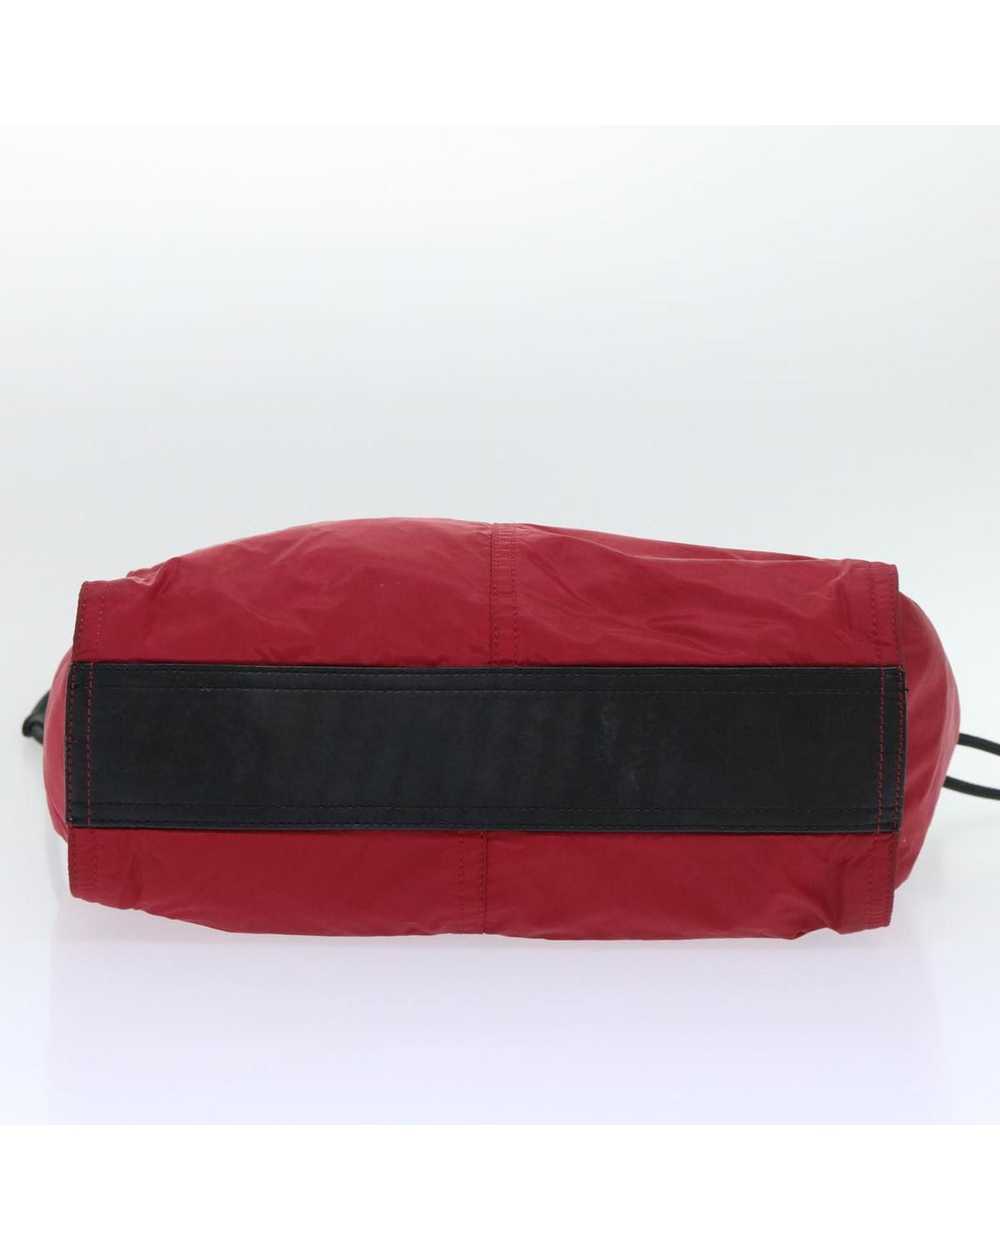 Burberry Red Nylon Leather Shoulder Bag - image 5